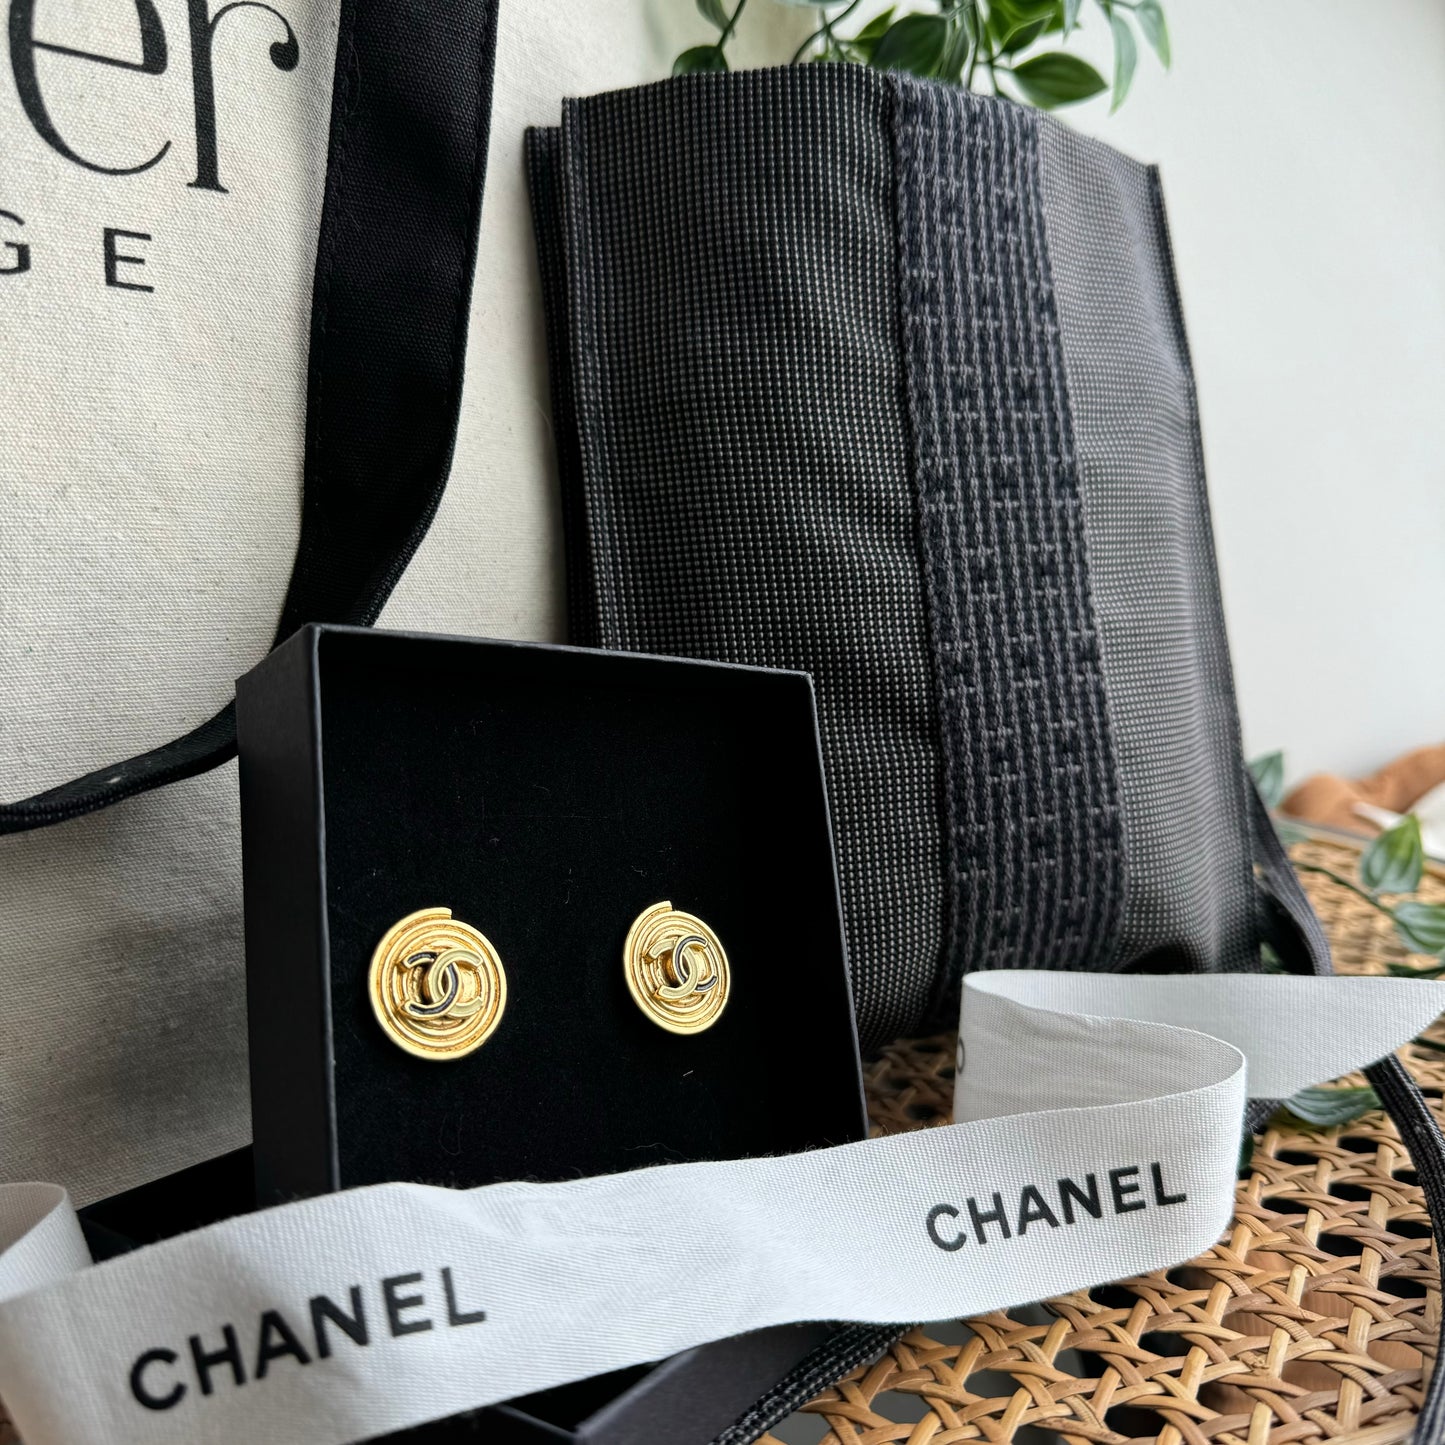 WINNER DRAWN 17/05/24-                     
May - Hermes Herline & Chanel Earring set - Raffle Giveaway - Gift Card Entry x 1